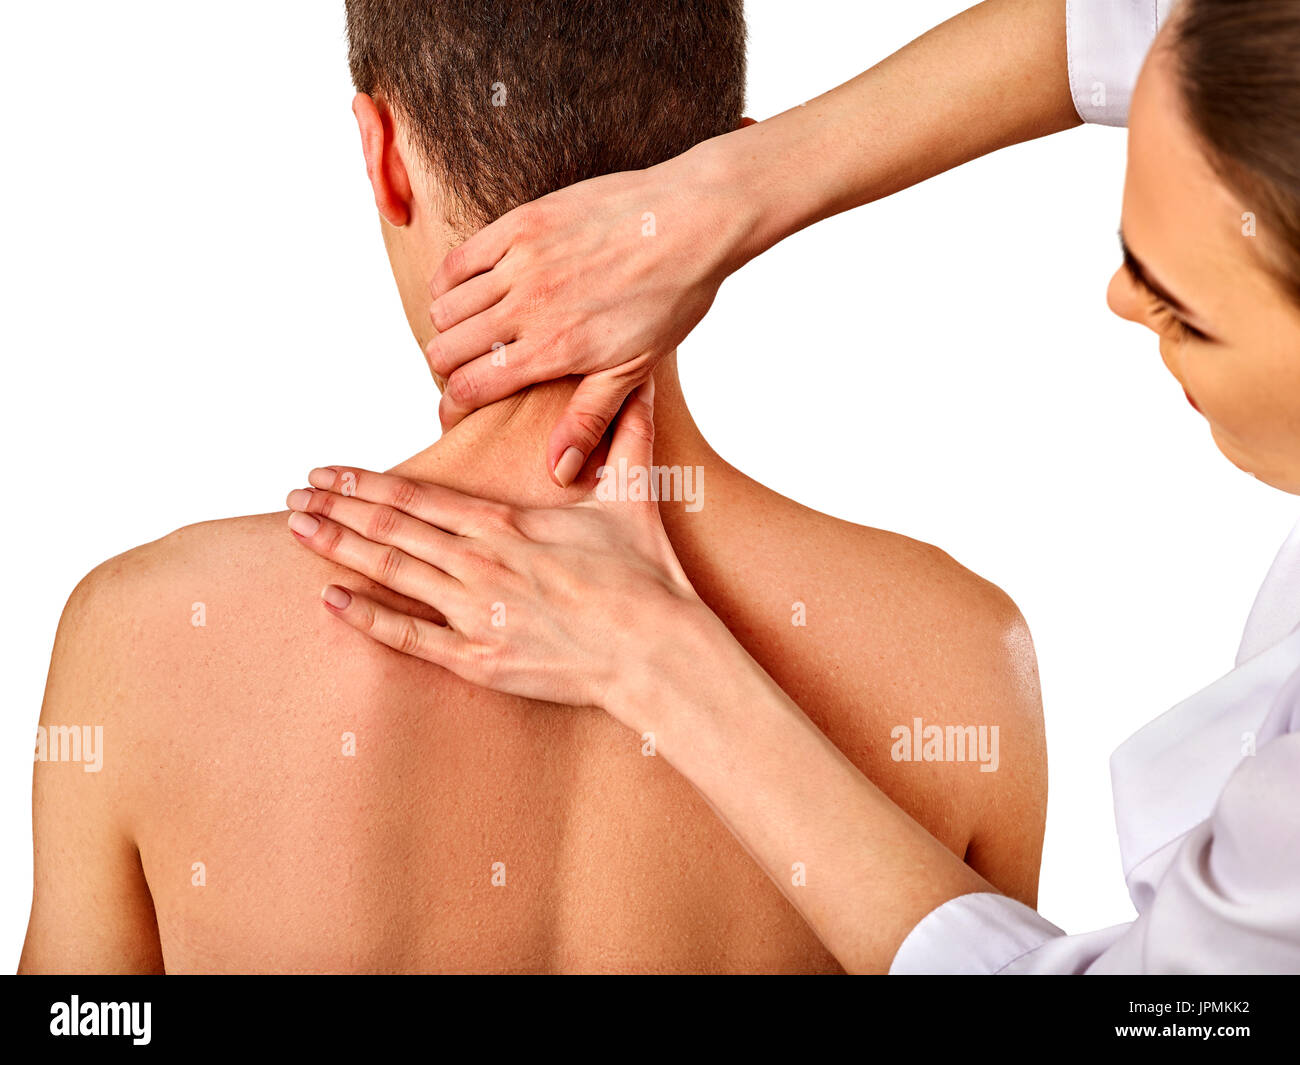 Shoulder and Neck Massage for Man in Spa Salon. Stock Image